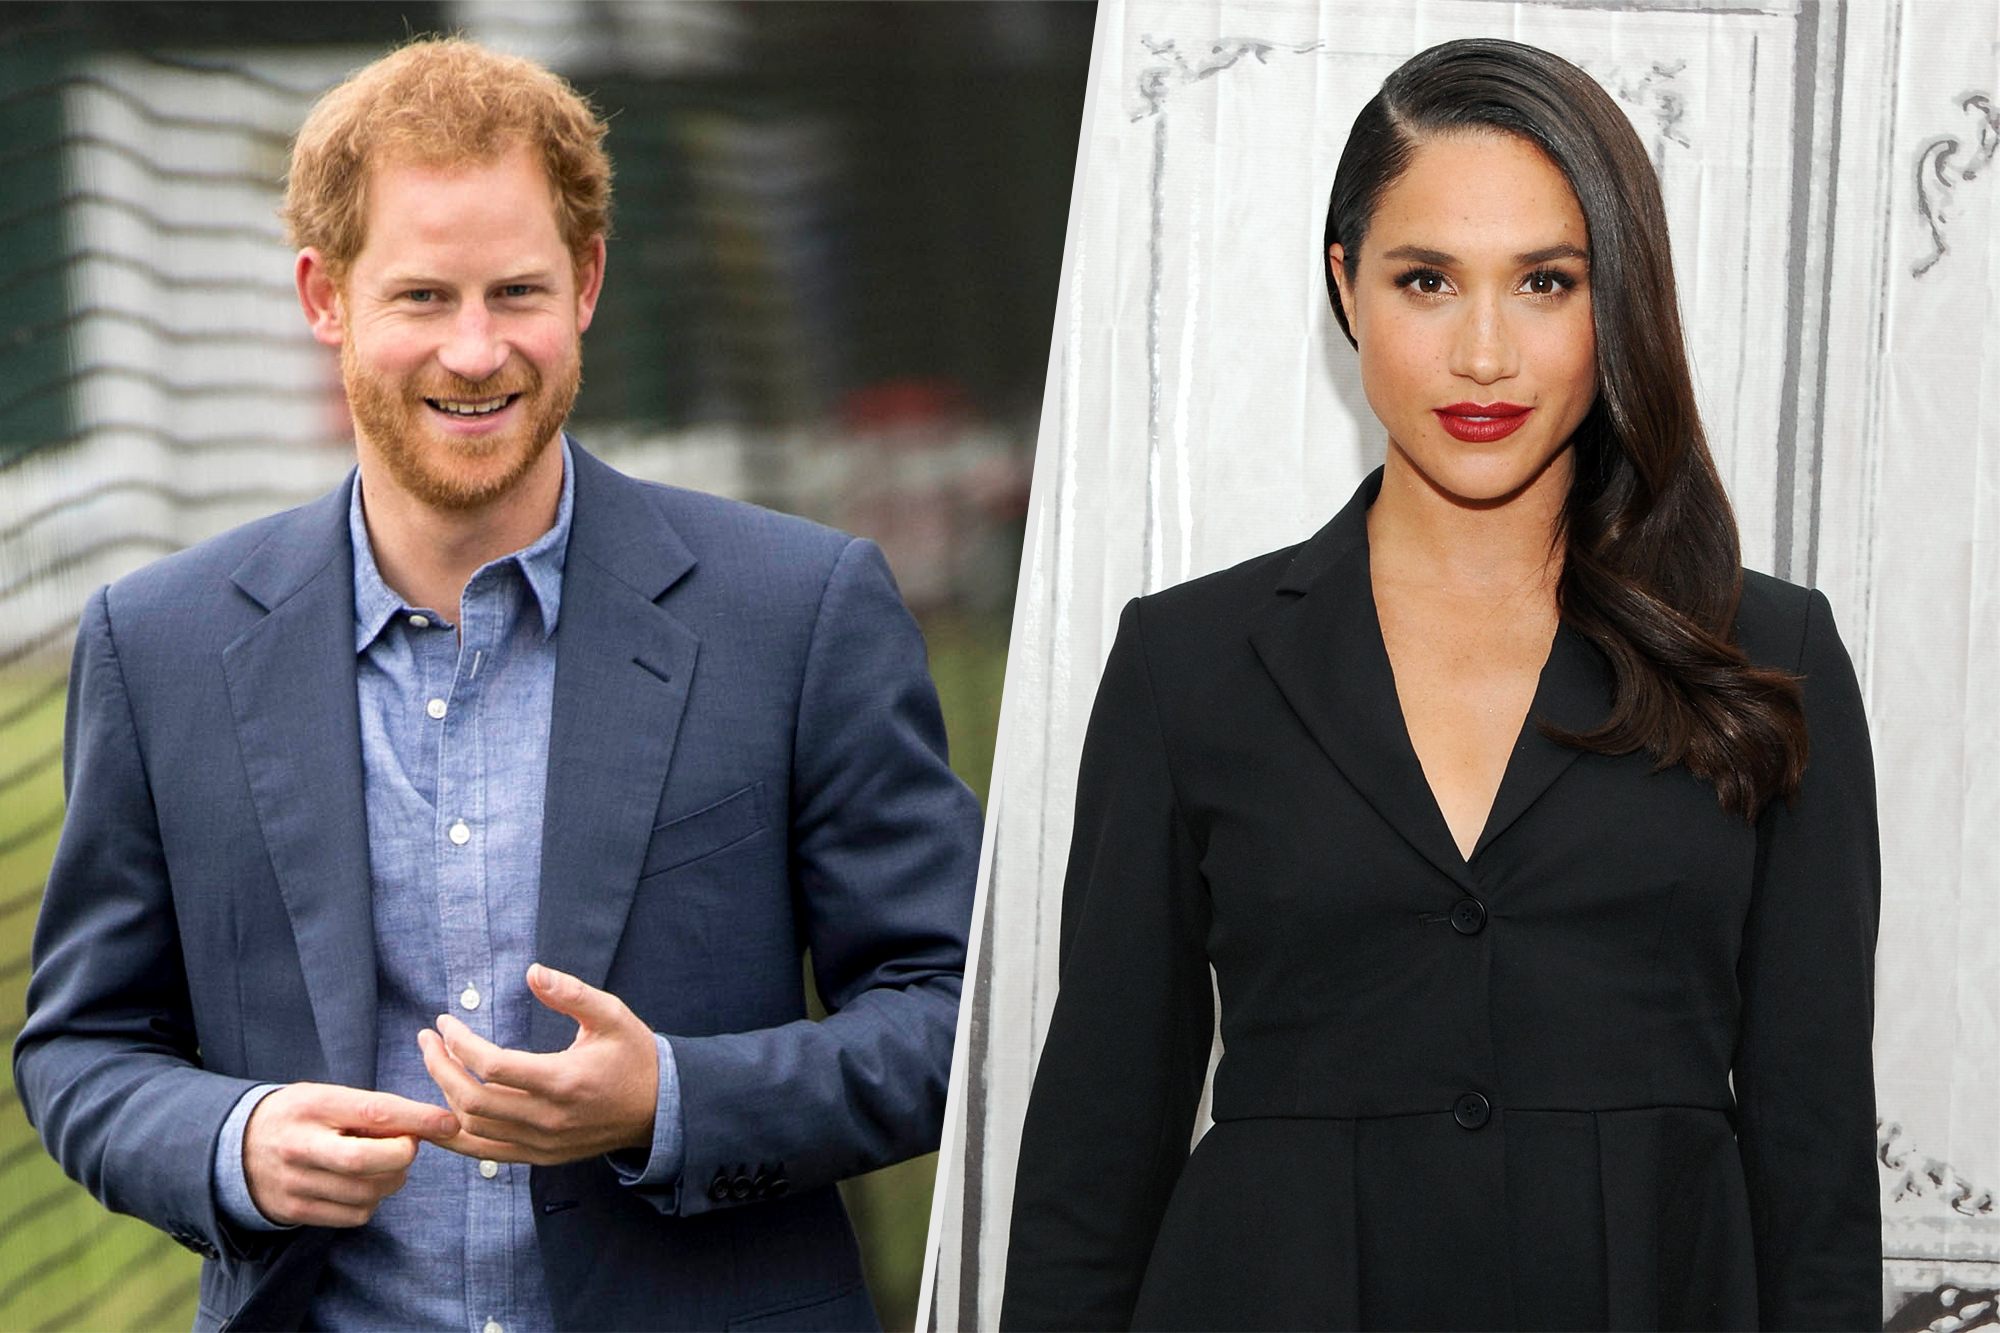 Prince Harry and Meghan Markle - The Royal Wedding 2018